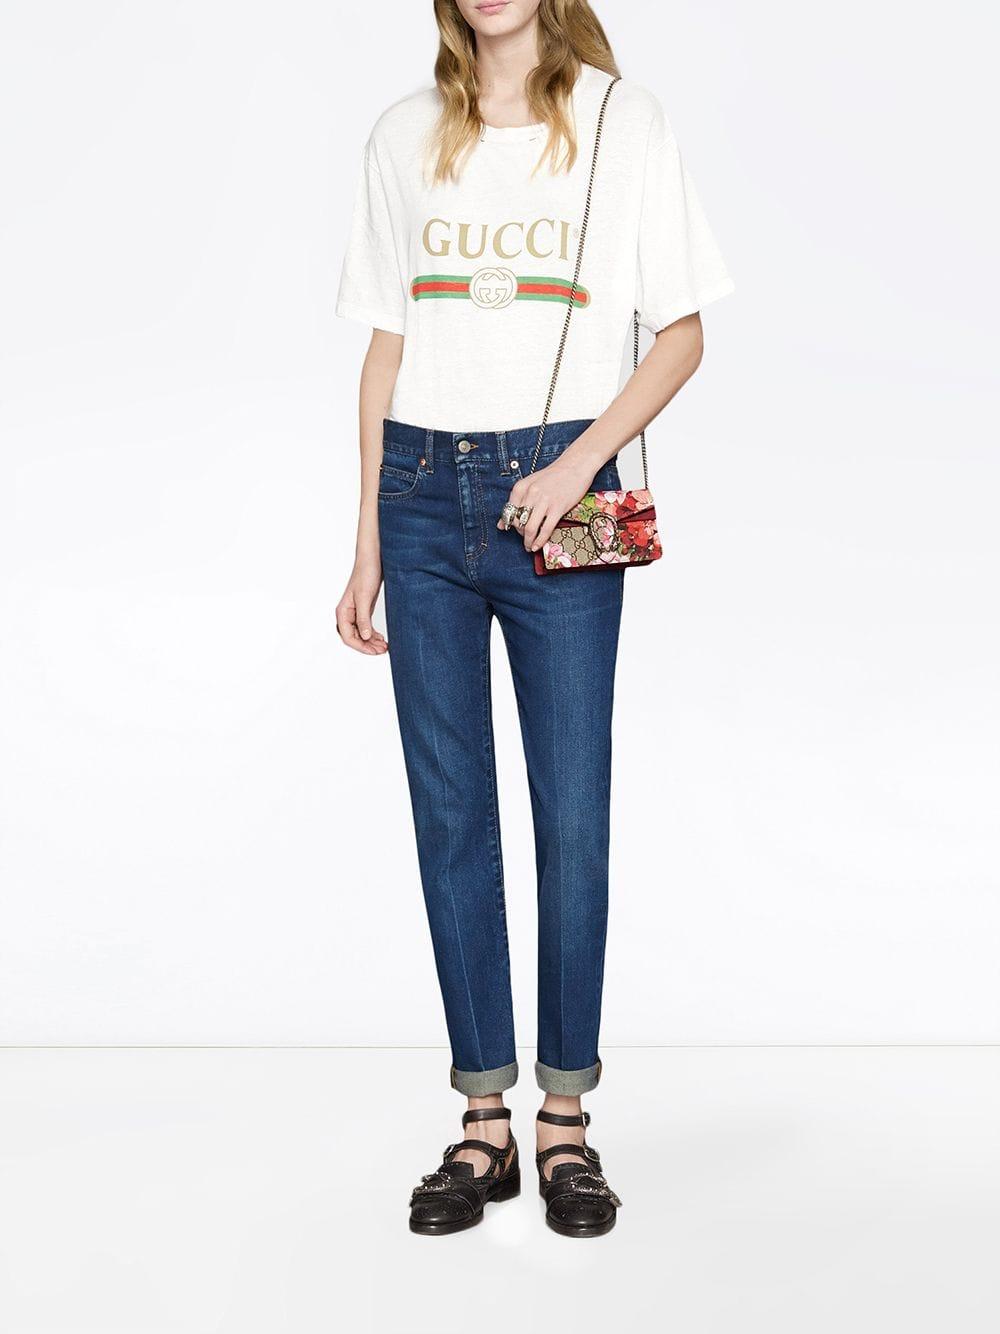 Gucci Dionysus GG Blooms Super Mini Bag | Lyst